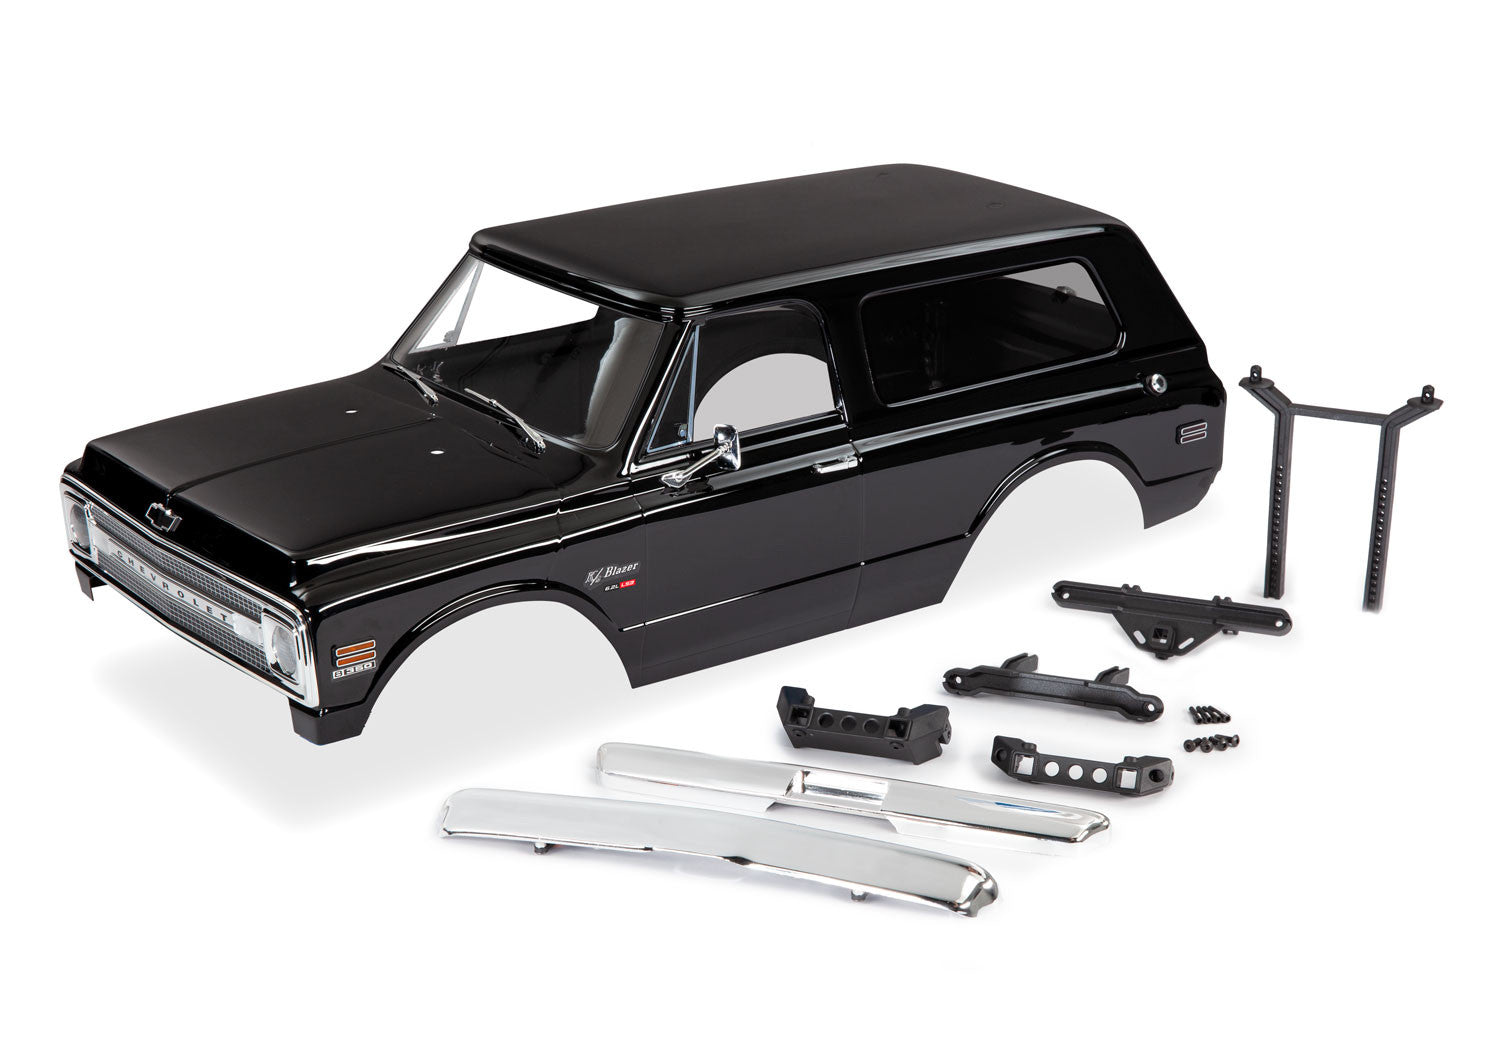 Traxxas Carrosserie Chevrolet Blazer 1969 Noir TRX-4 9112X